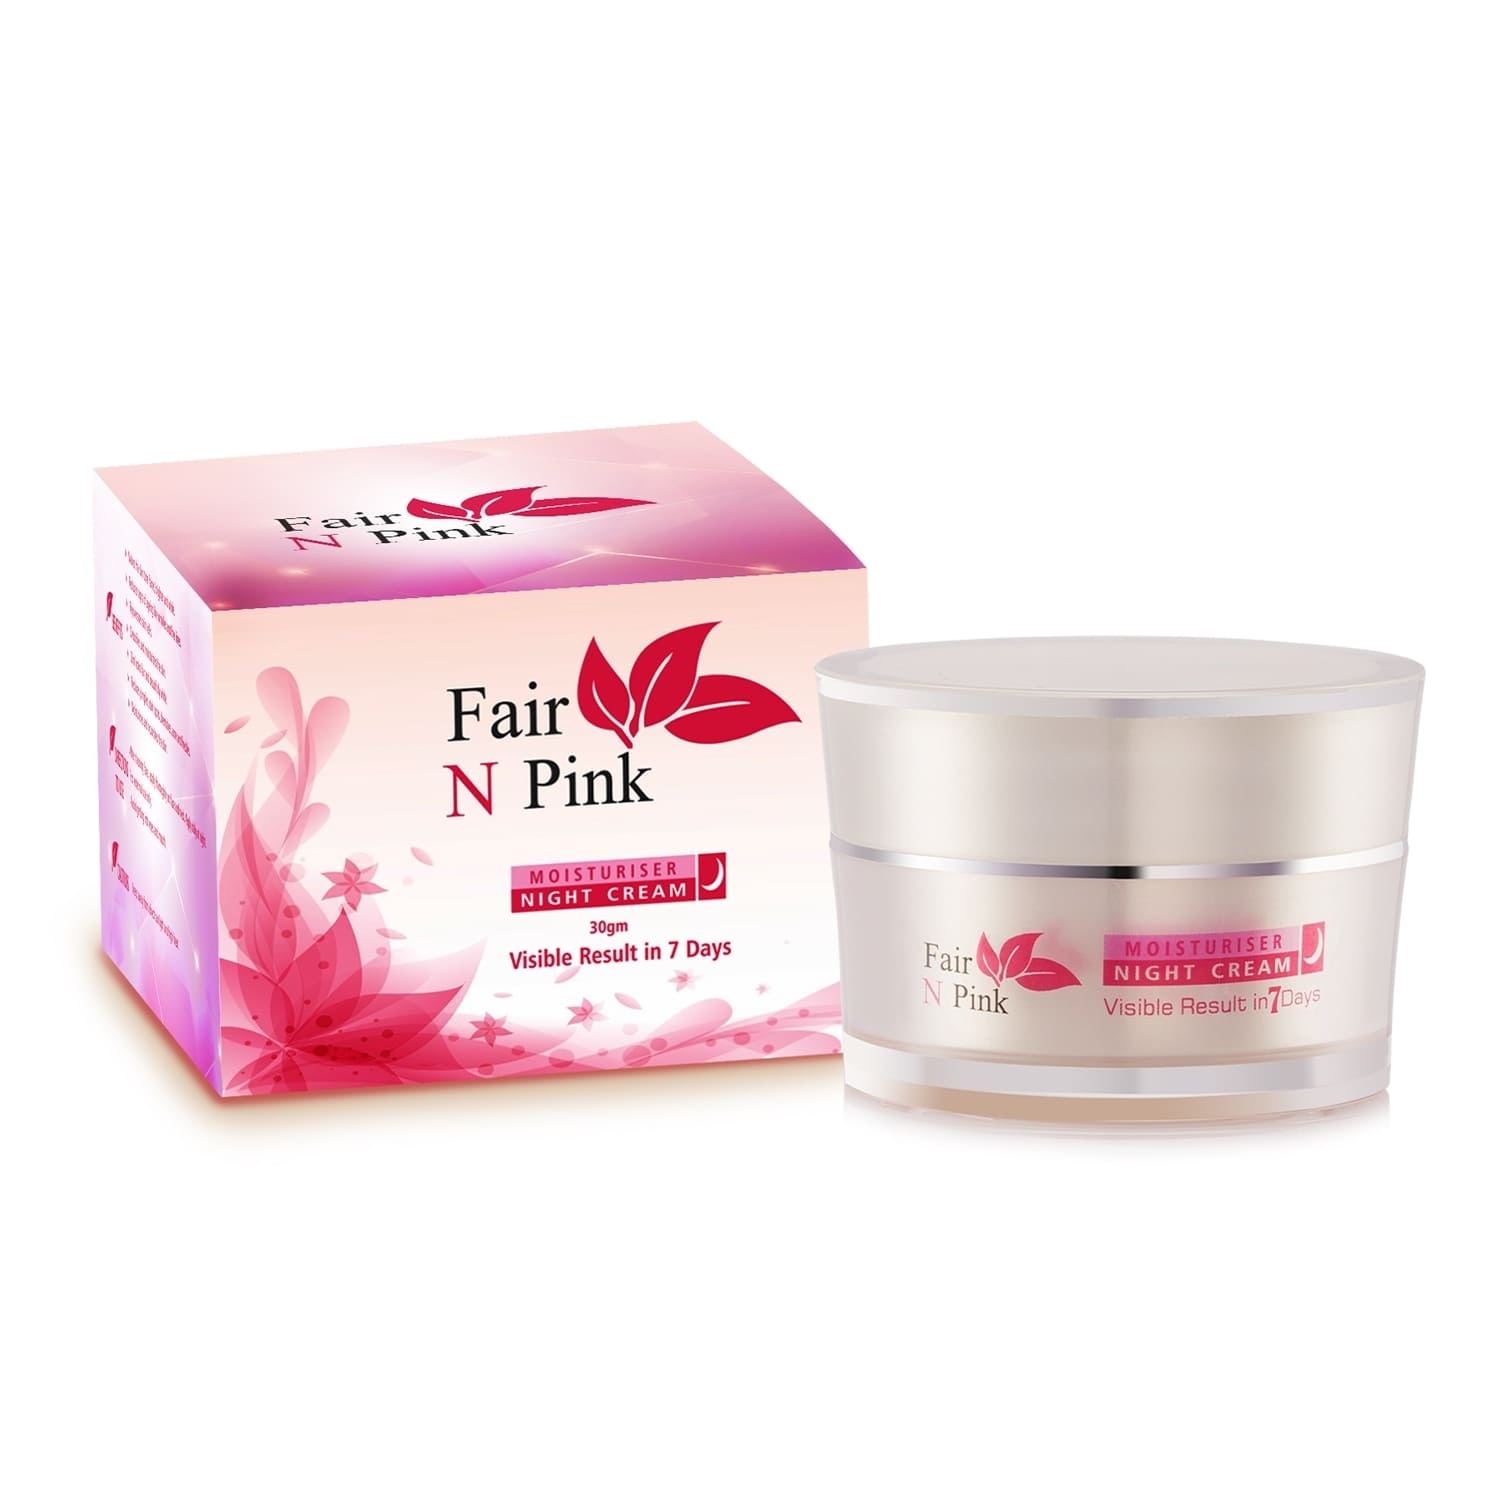 Fair N pink whitening cream (30gm) Moisturizer Night Cream